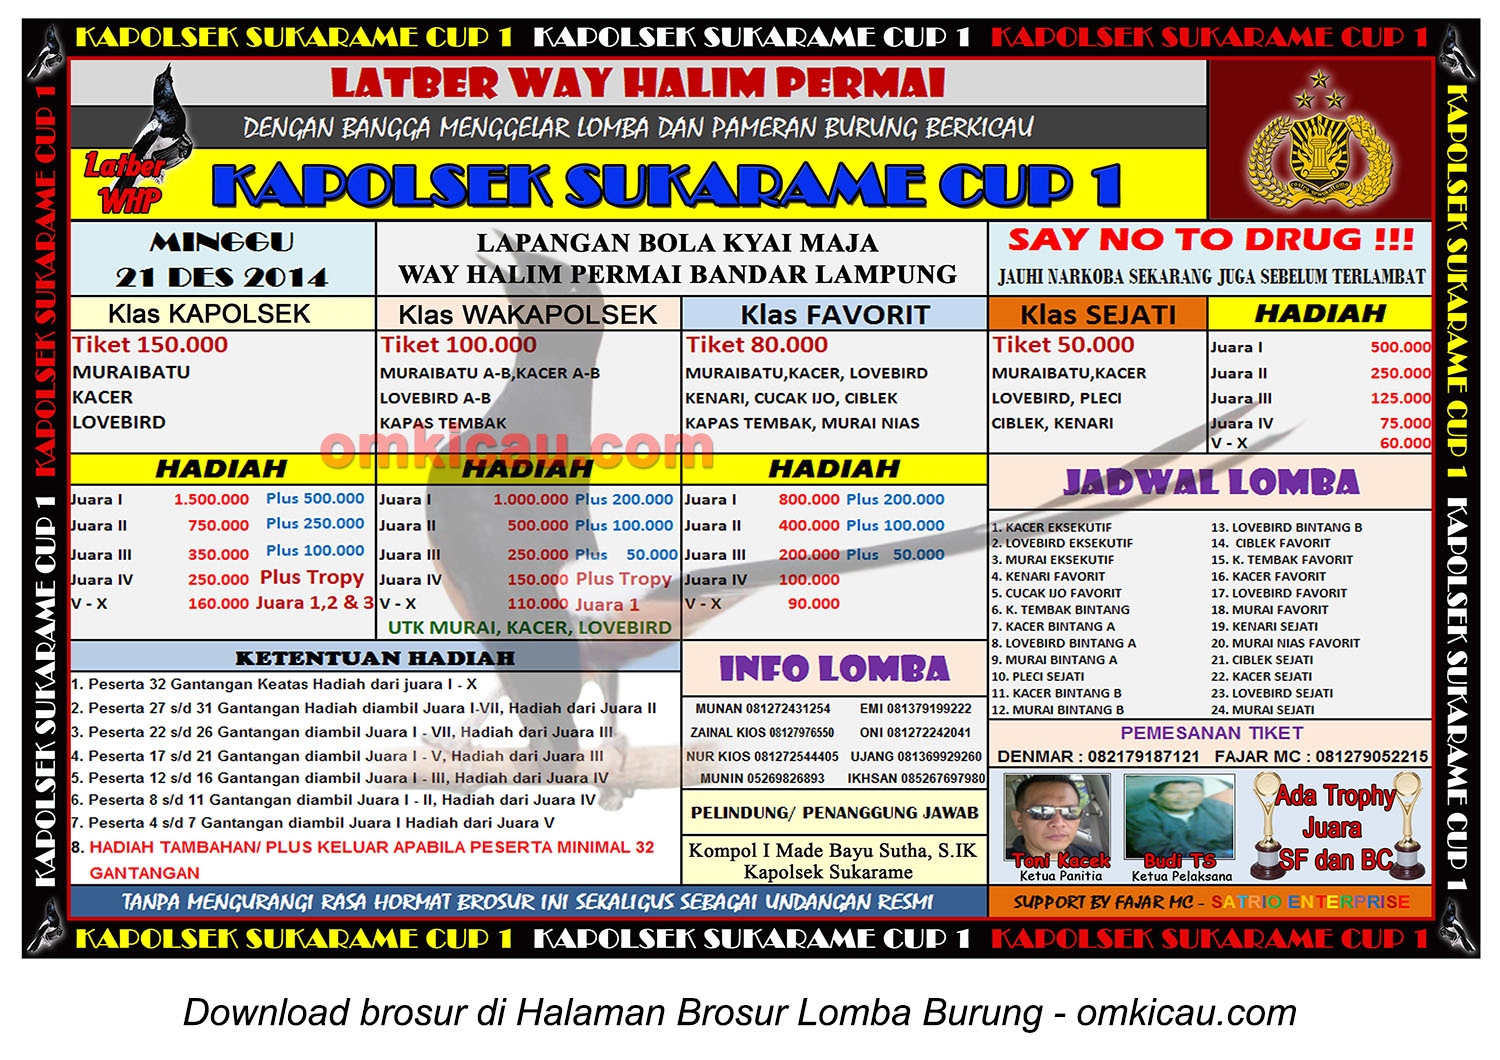 Brosur Lomba Burung Berkicau Kapolsek Sukarame Cup 1, Bandarlampung, 21 Desember 2014